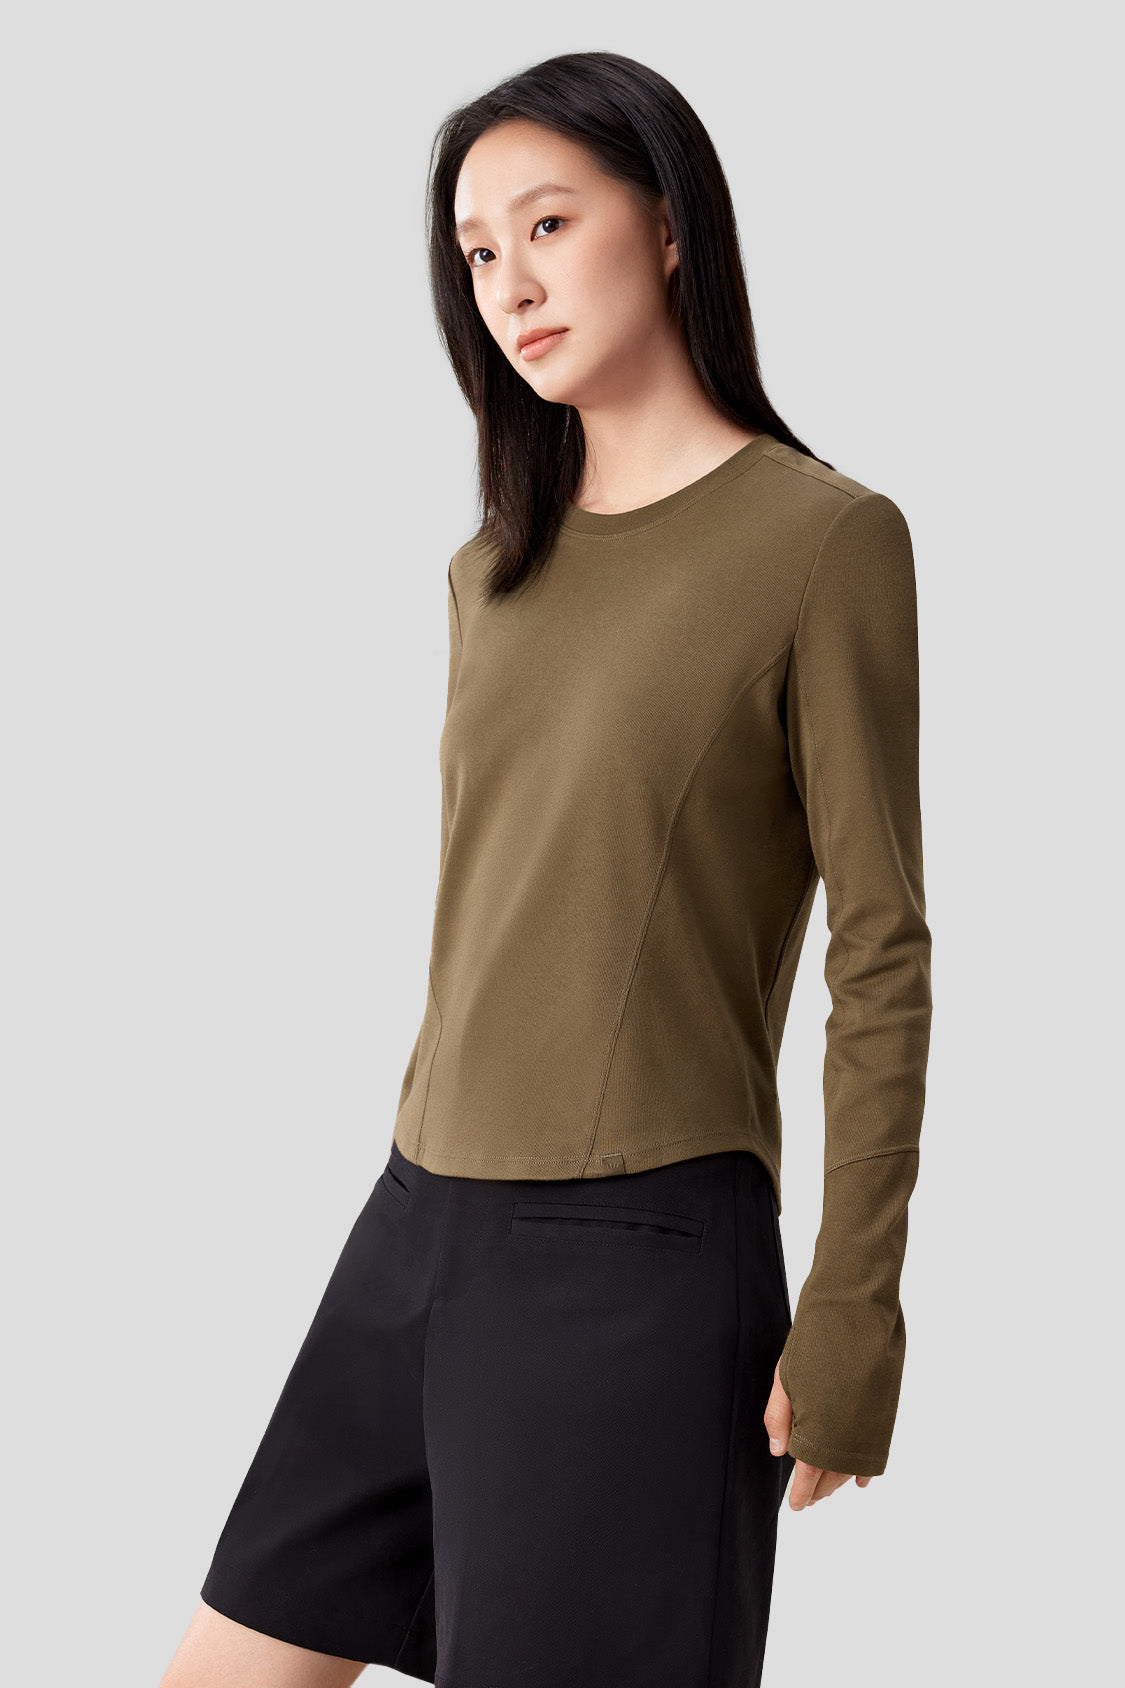 beneunder women's double layer elastic cotton slim fit t-shirt #color_truffle brown